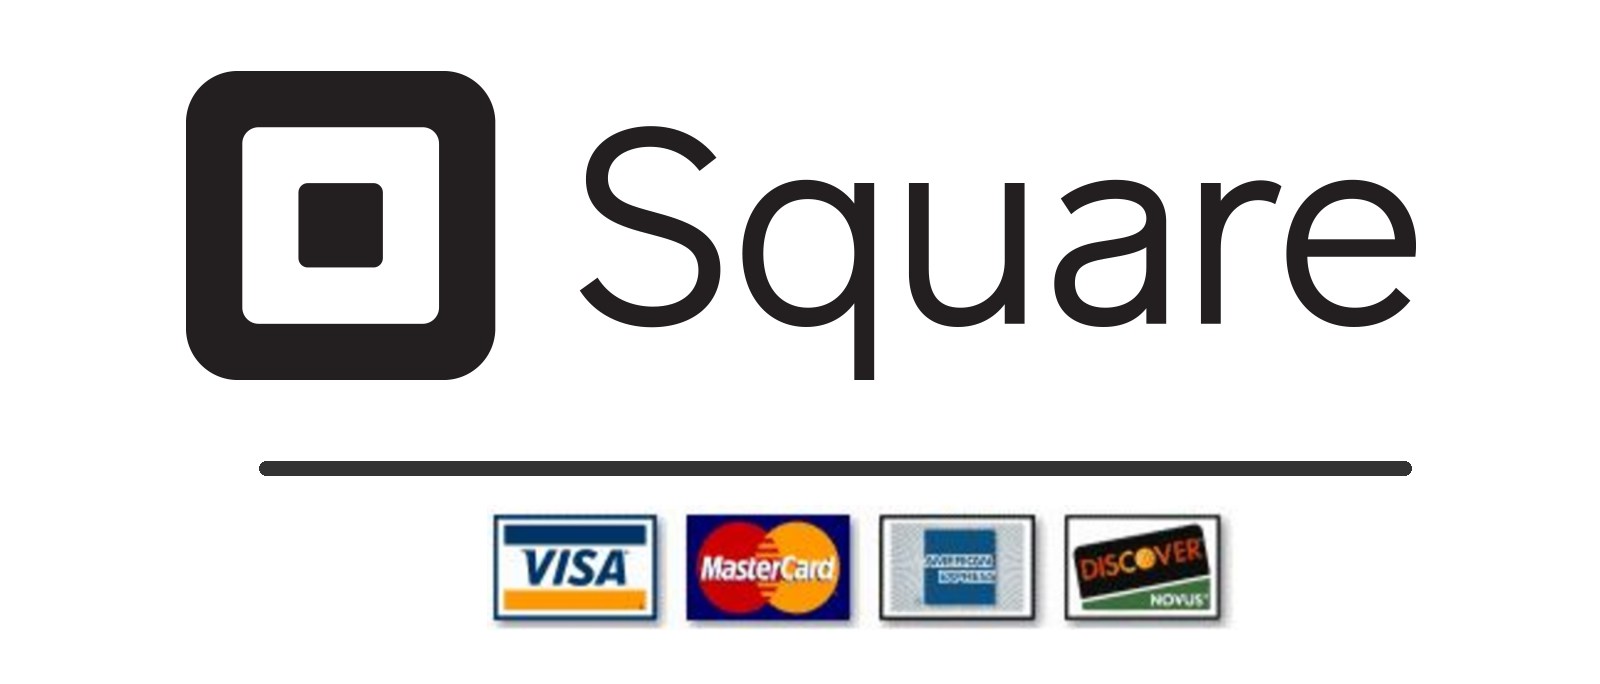 Square credit card logo